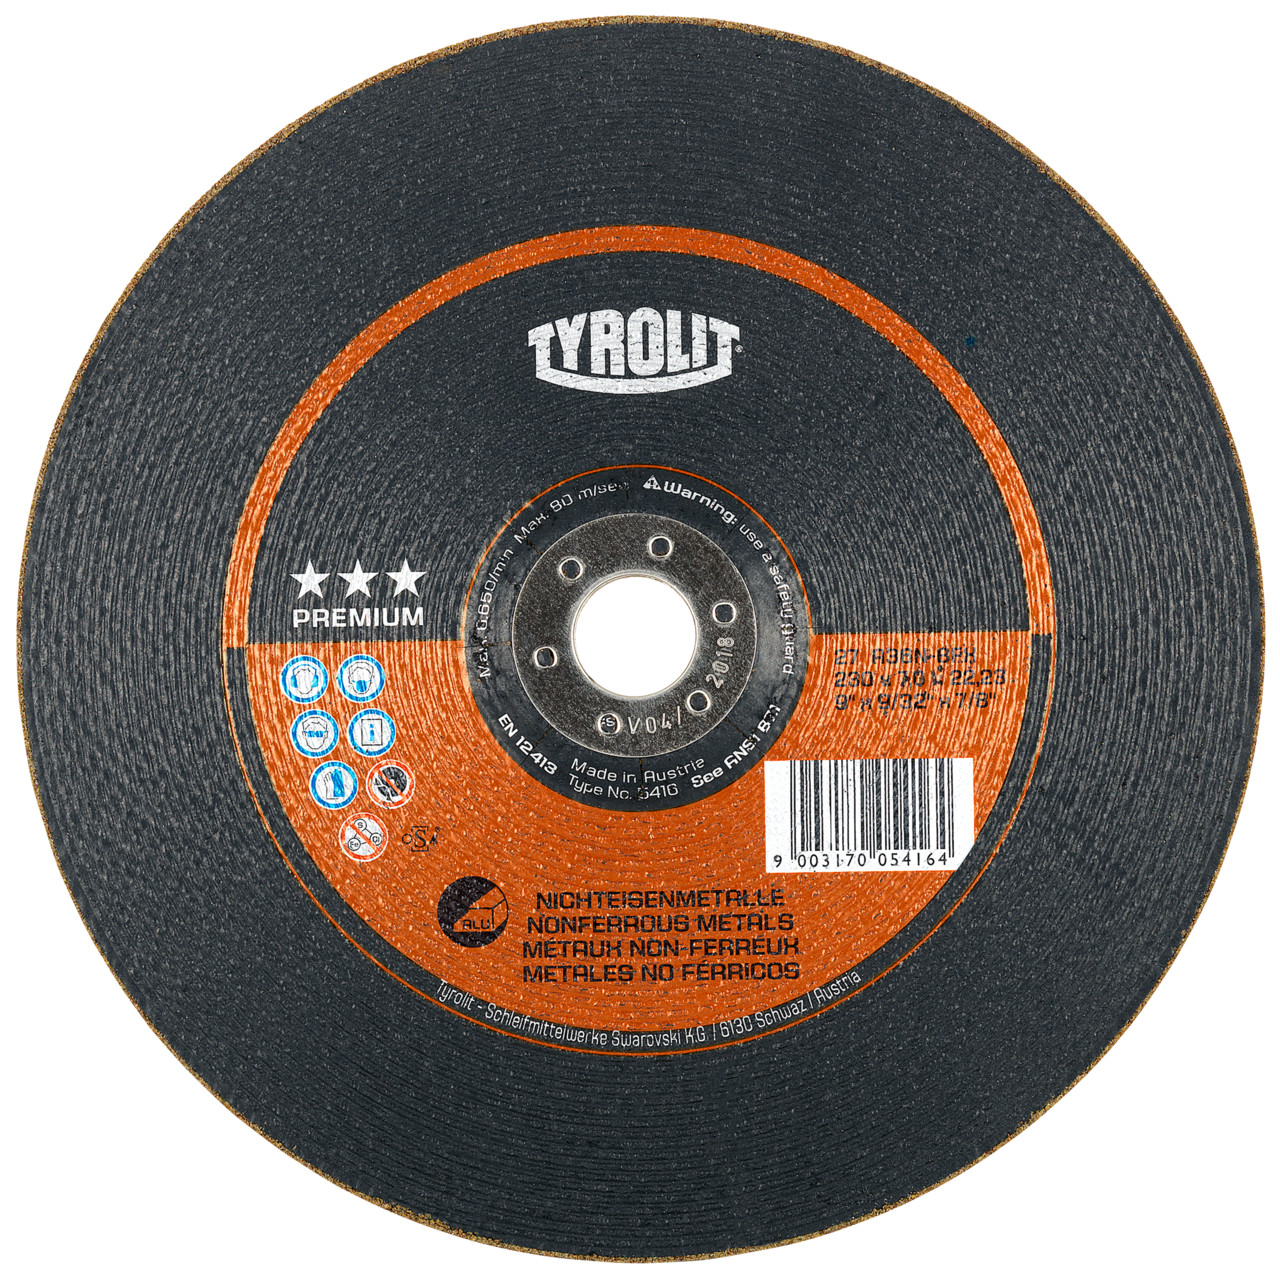 TYROLIT grinding wheel DxUxH 230x4x22.23 For non-ferrous metals, shape: 27 - offset version, Art. 46586